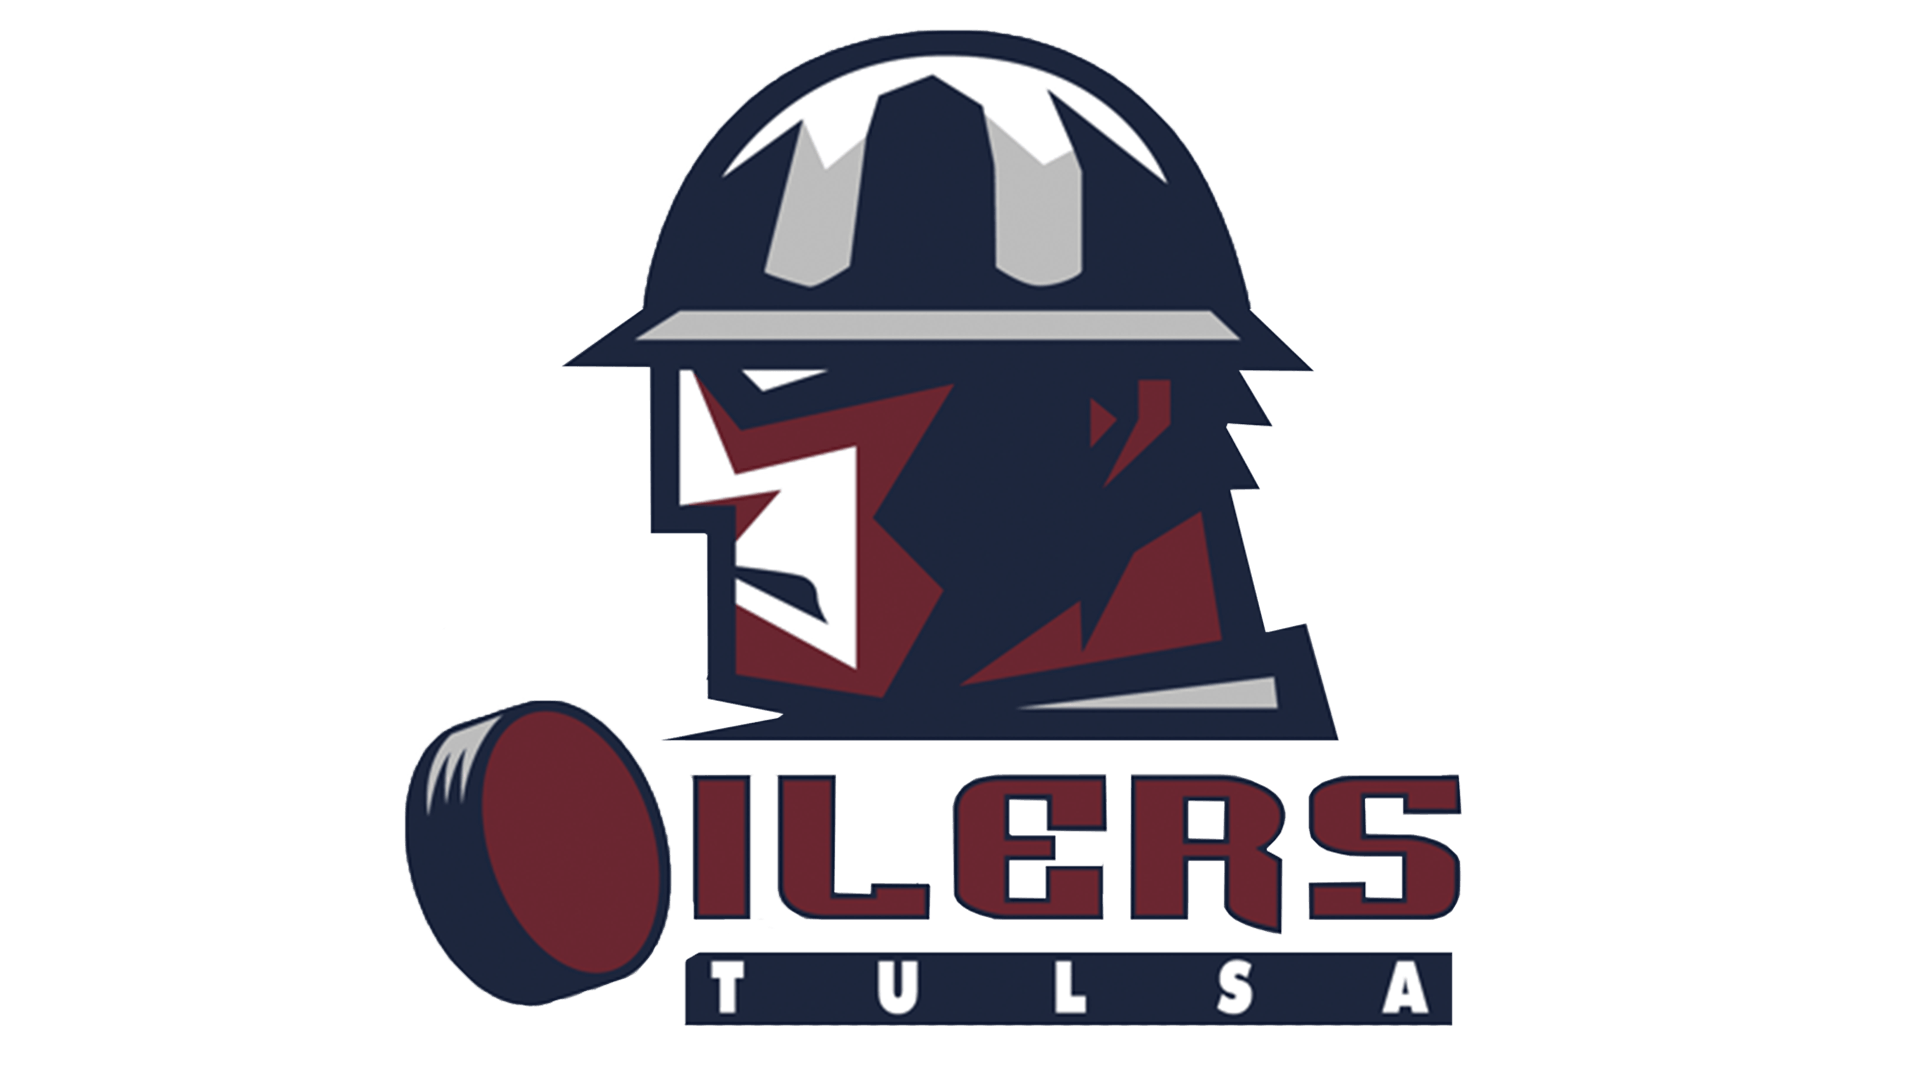 Tulsa Logo - Meaning Tulsa Oilers logo and symbol. history and evolution